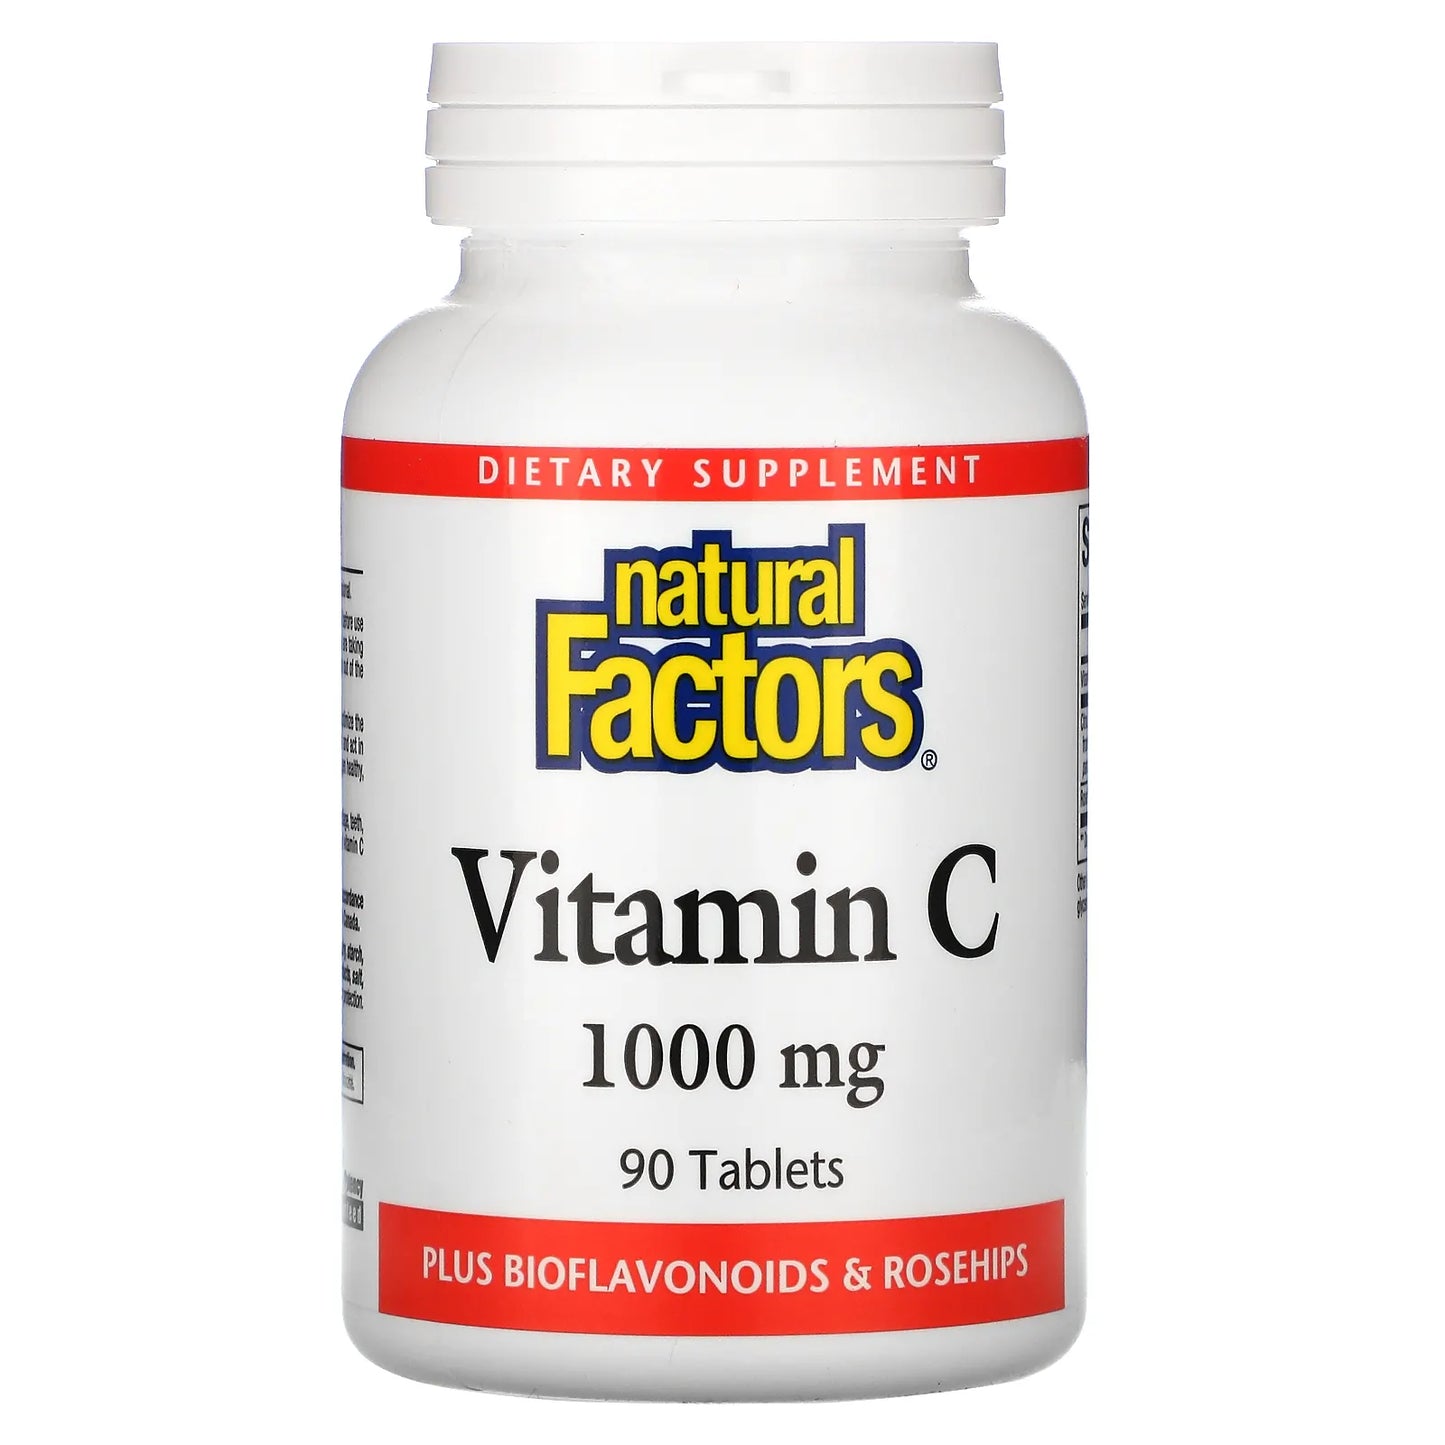 Natural Factors Vitamin C 1000mg in 90 tablets